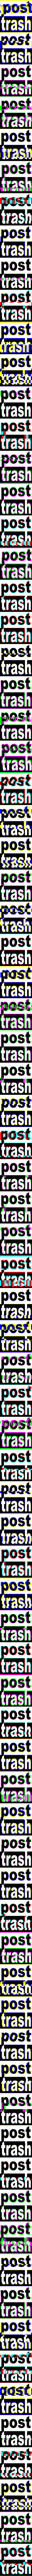 Post Trash collection image